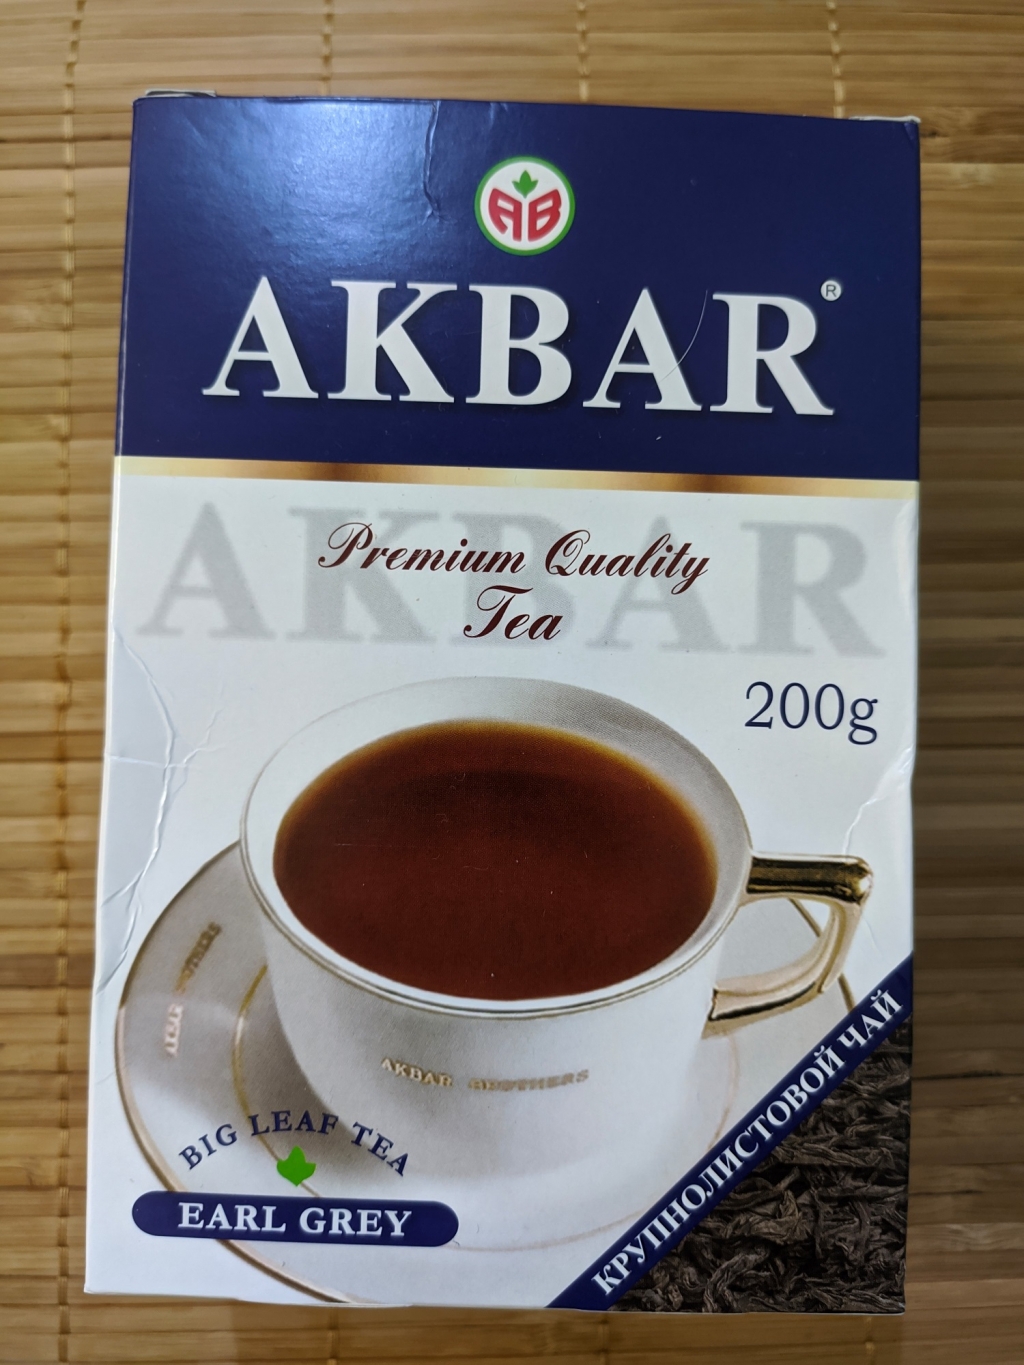 Akbar Earl Grey крупнолистовой 200 г - Вкусный чай с бергамотом